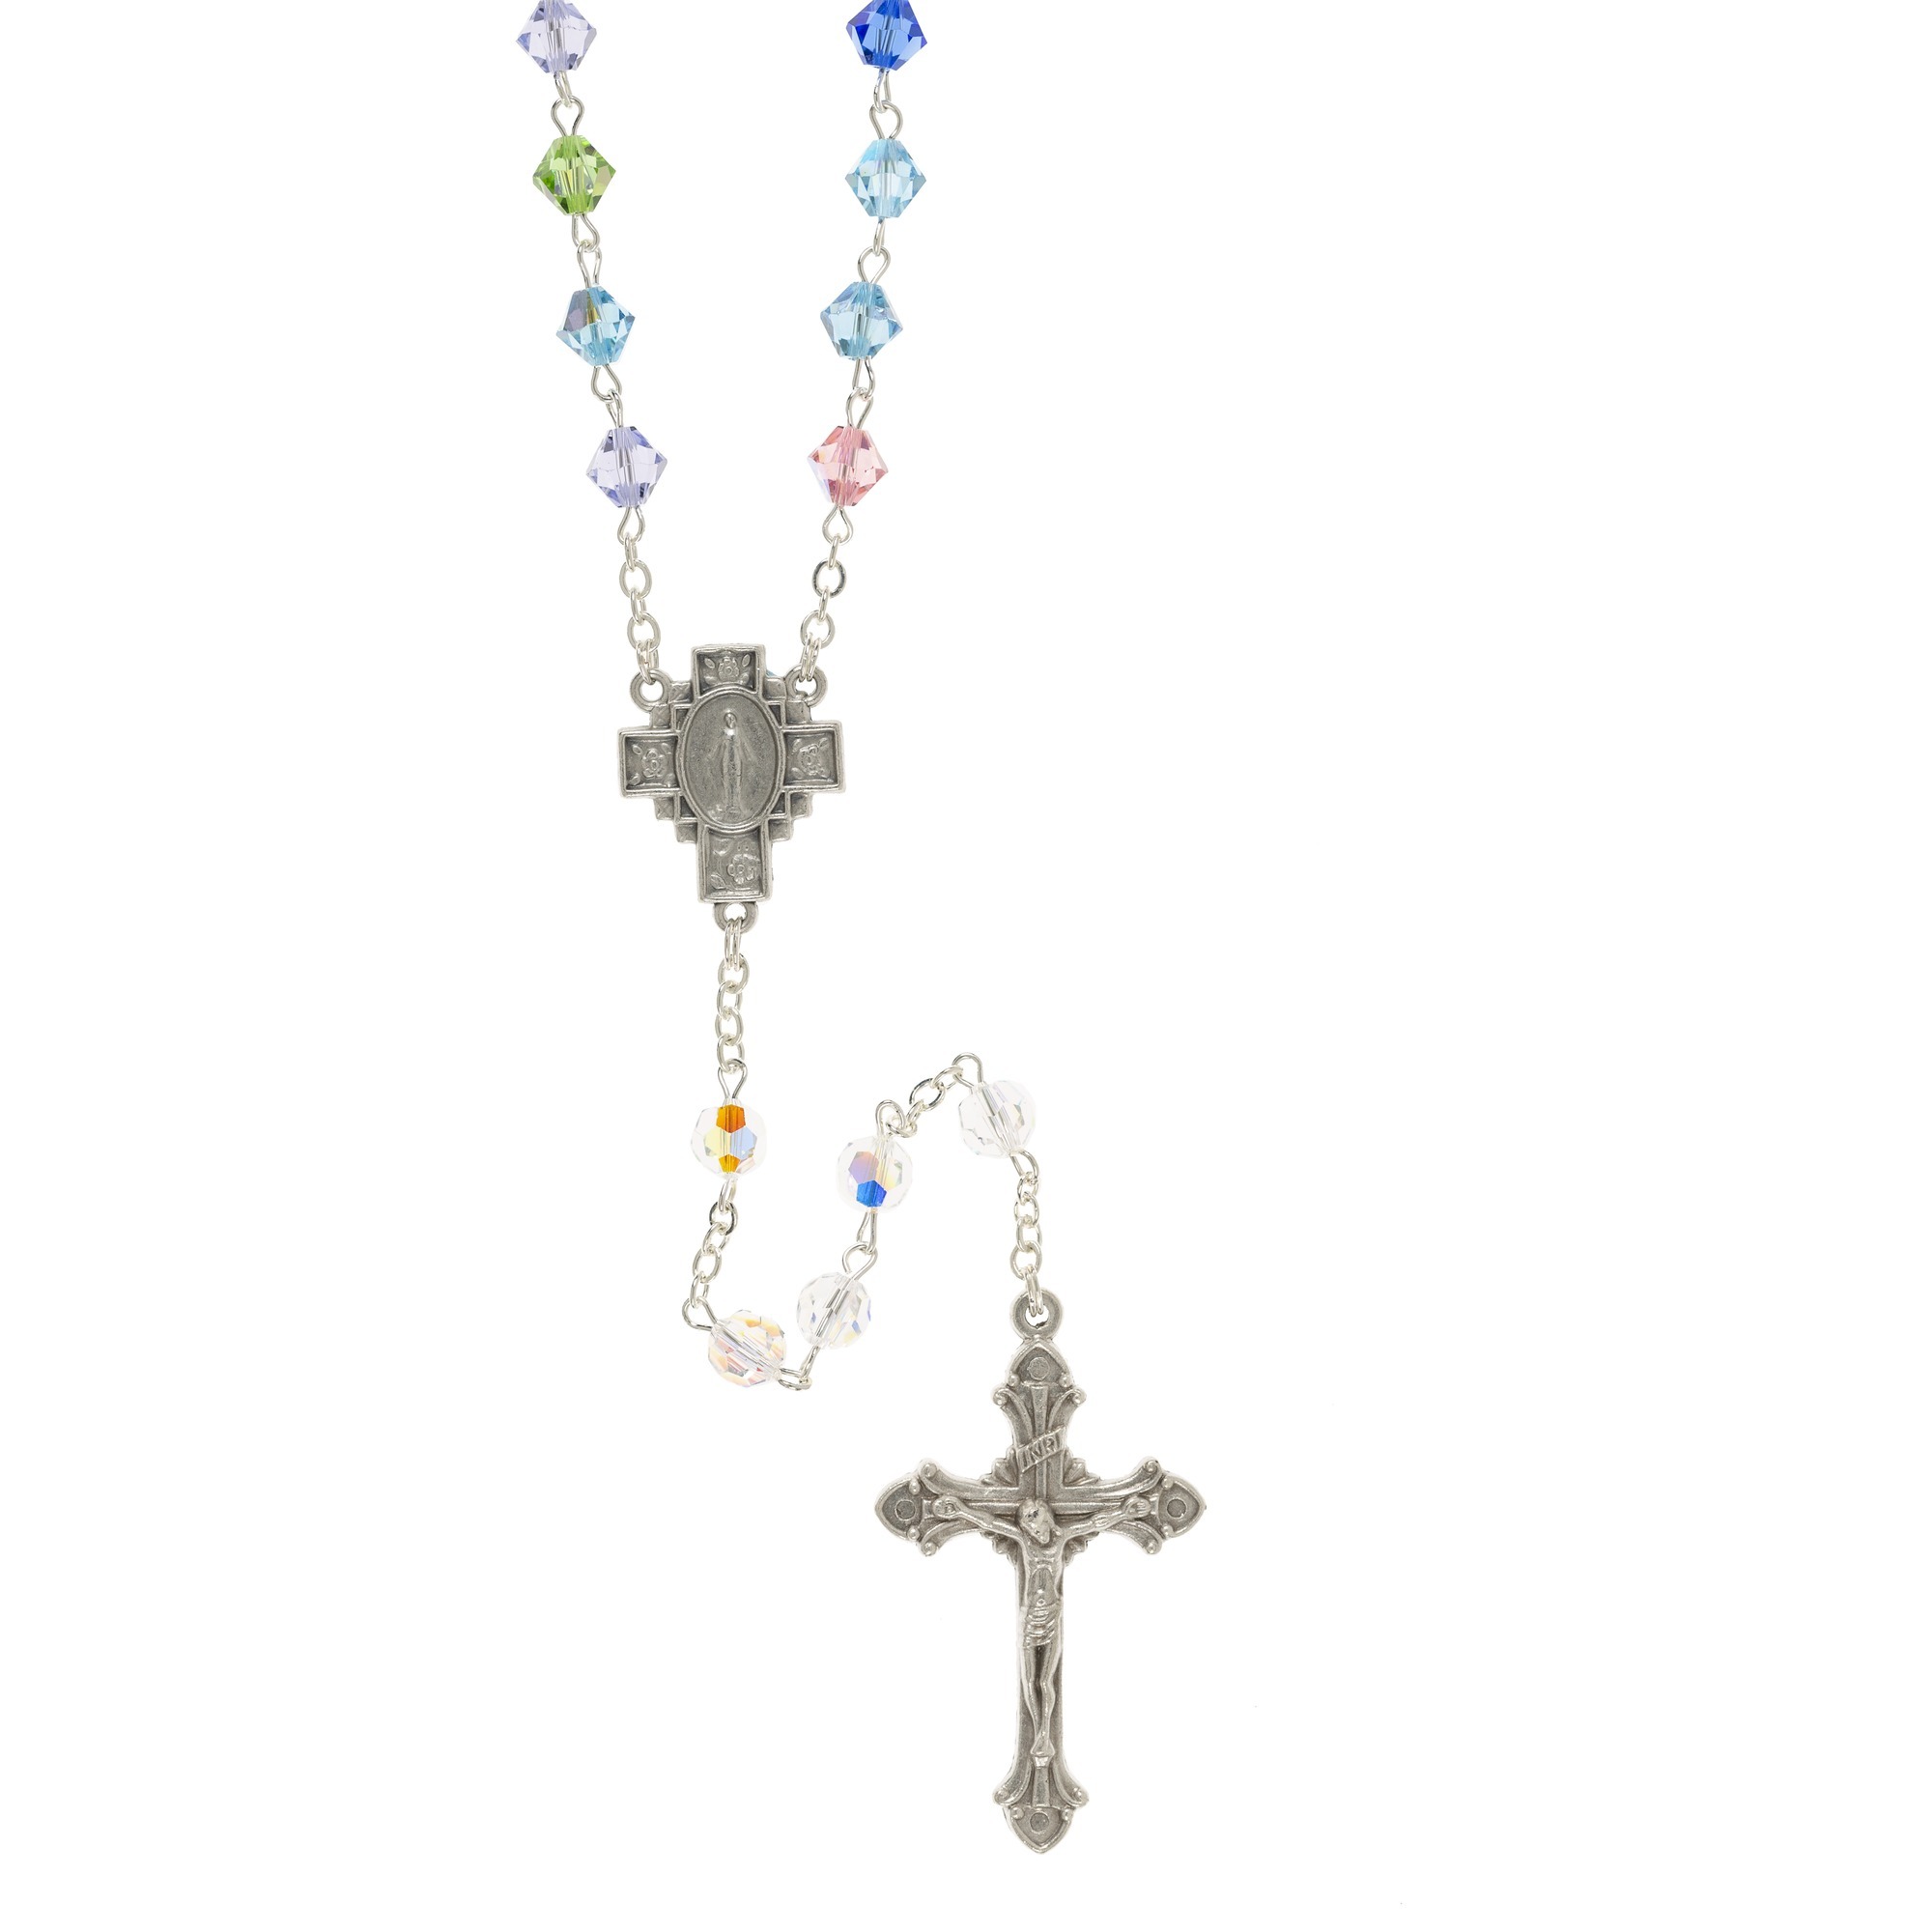 Handmade colorful swavorski crystal catholic rosary